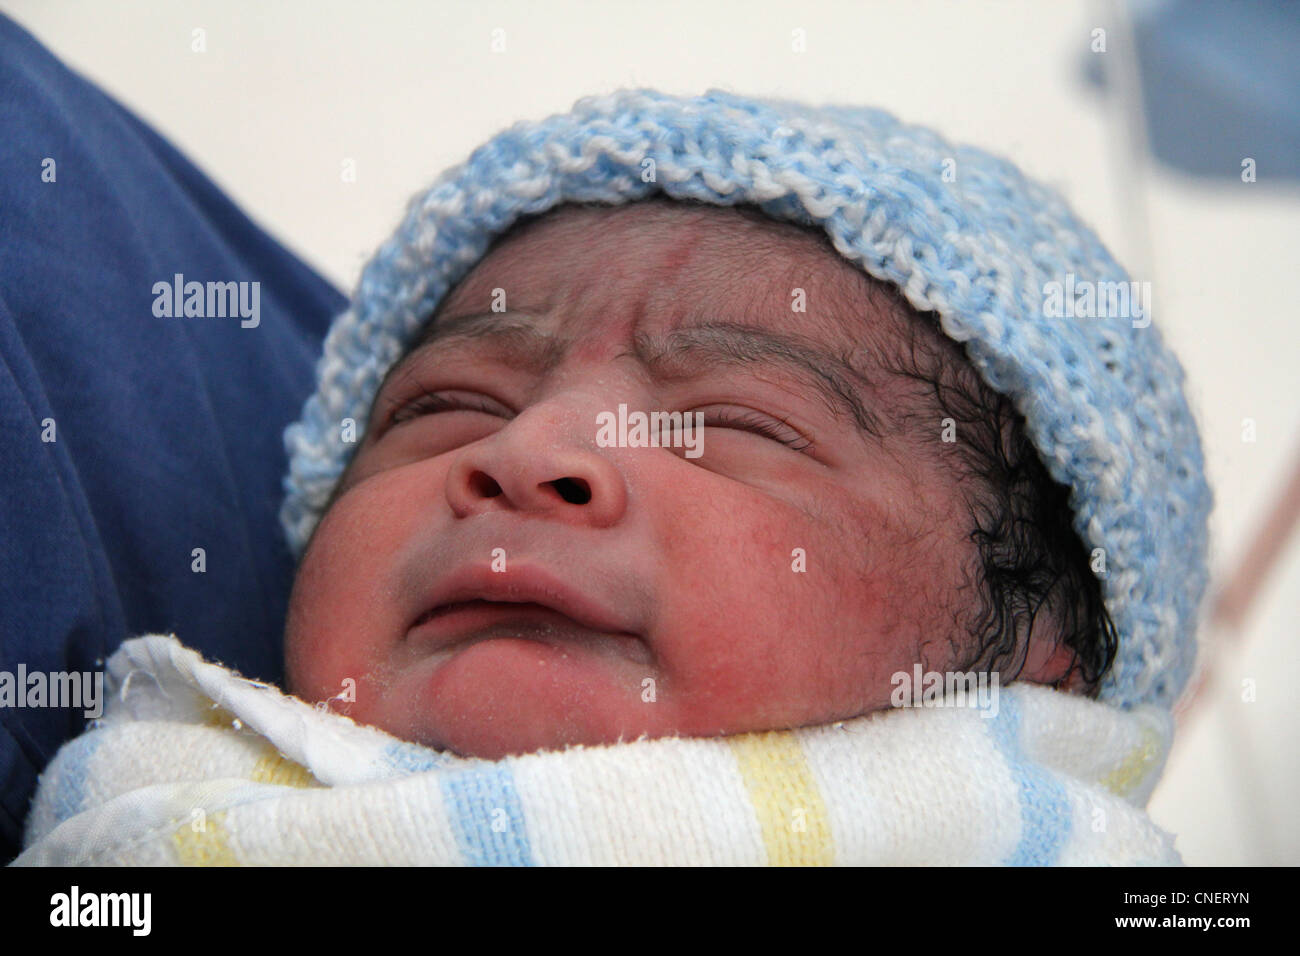 New born baby boy Stock Photo